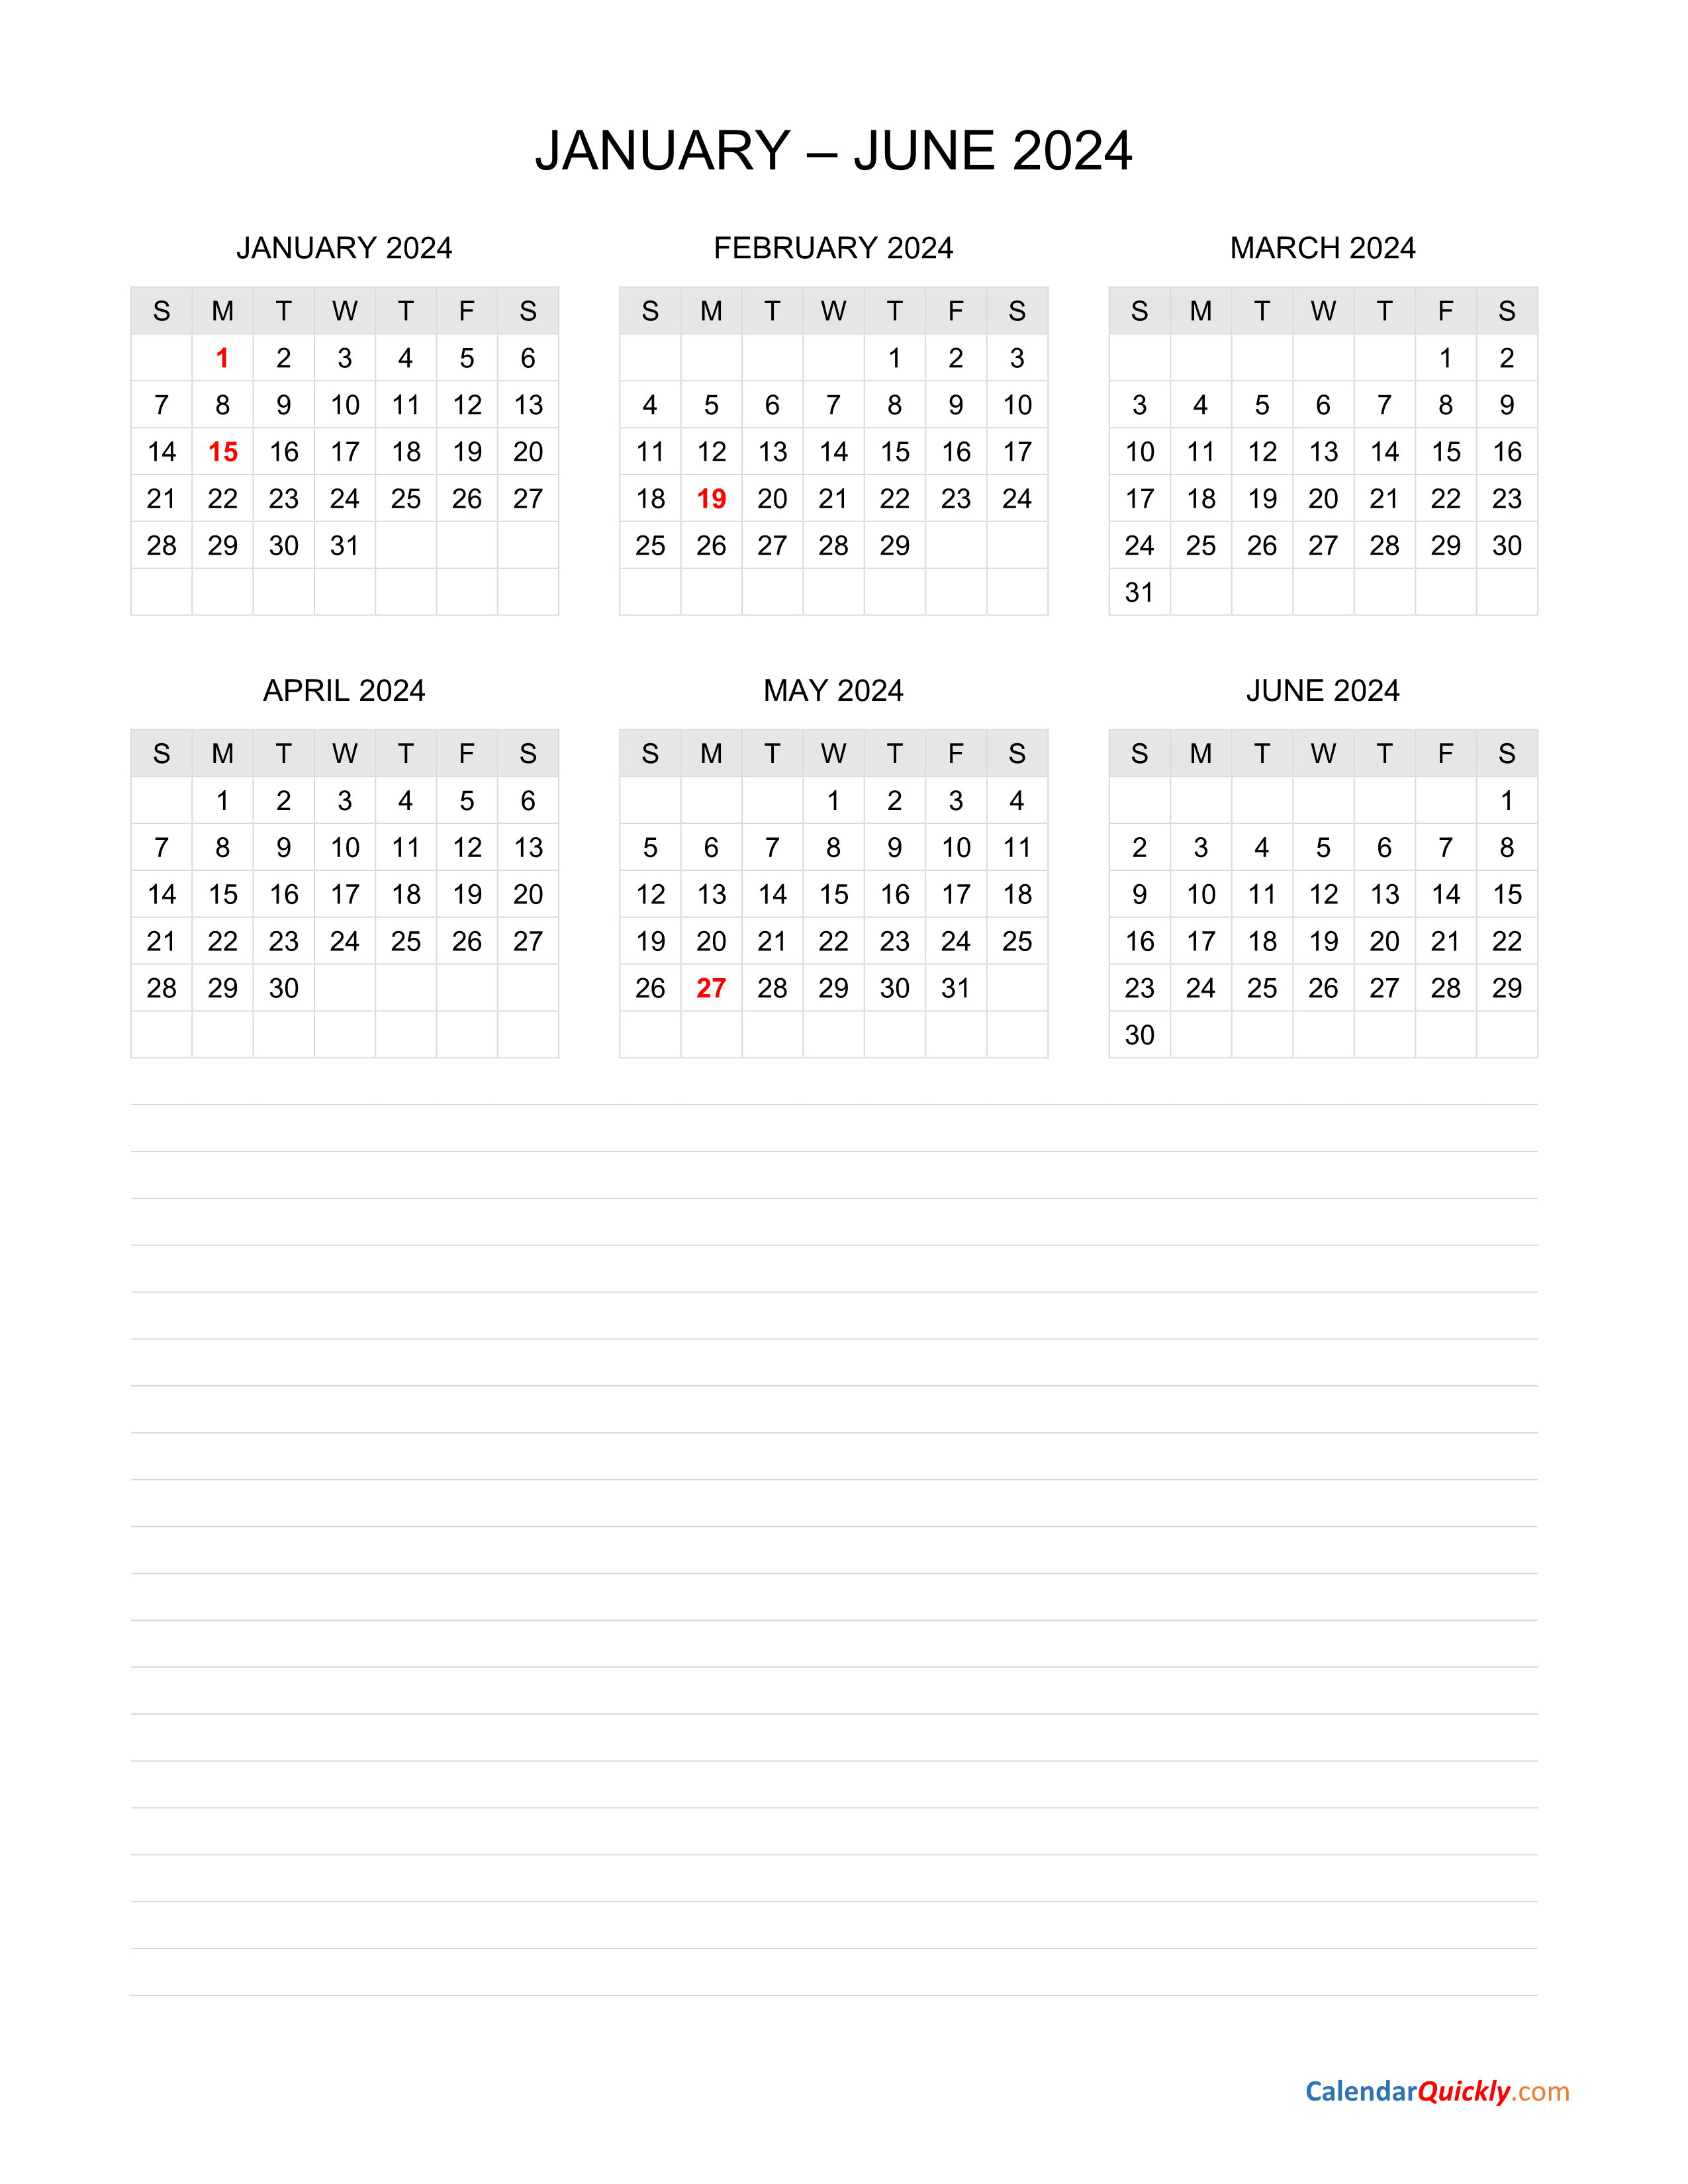 January To June 2024 Calendar With Notes | Calendar Quickly with January Through June 2024 Calendar